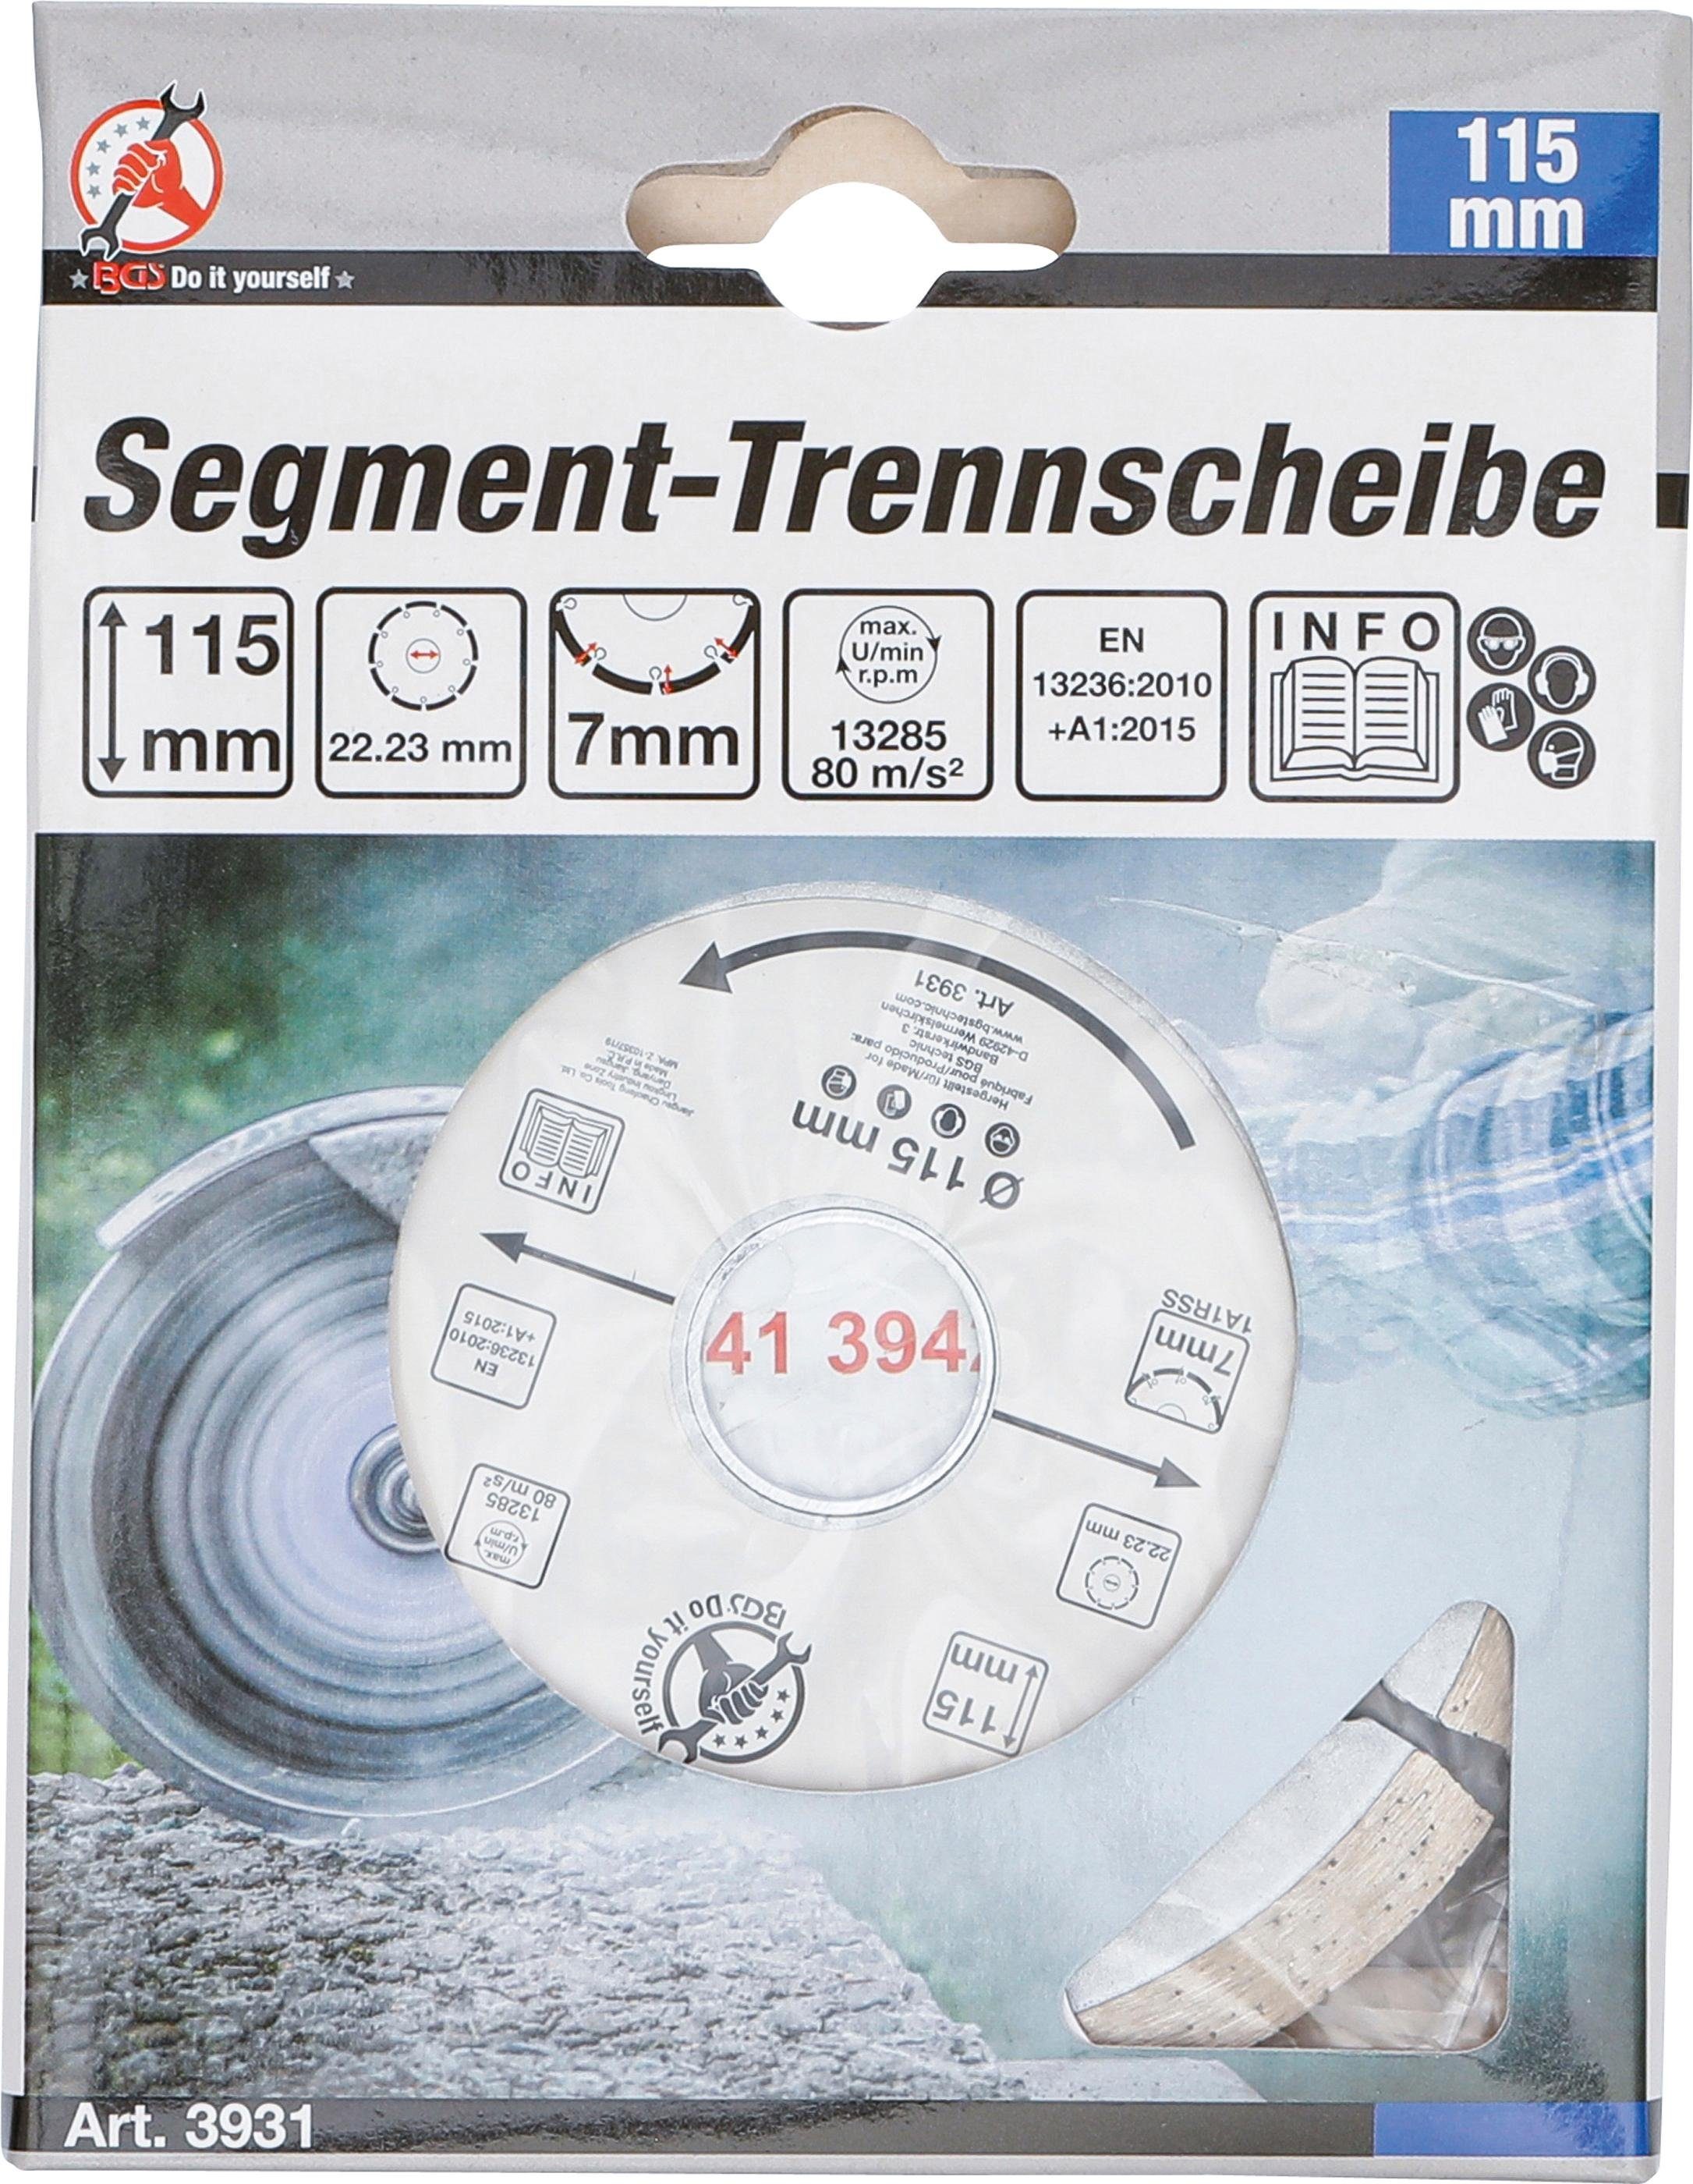 BGS technic Trennscheibe Segment-Trennscheibe, Ø mm 115